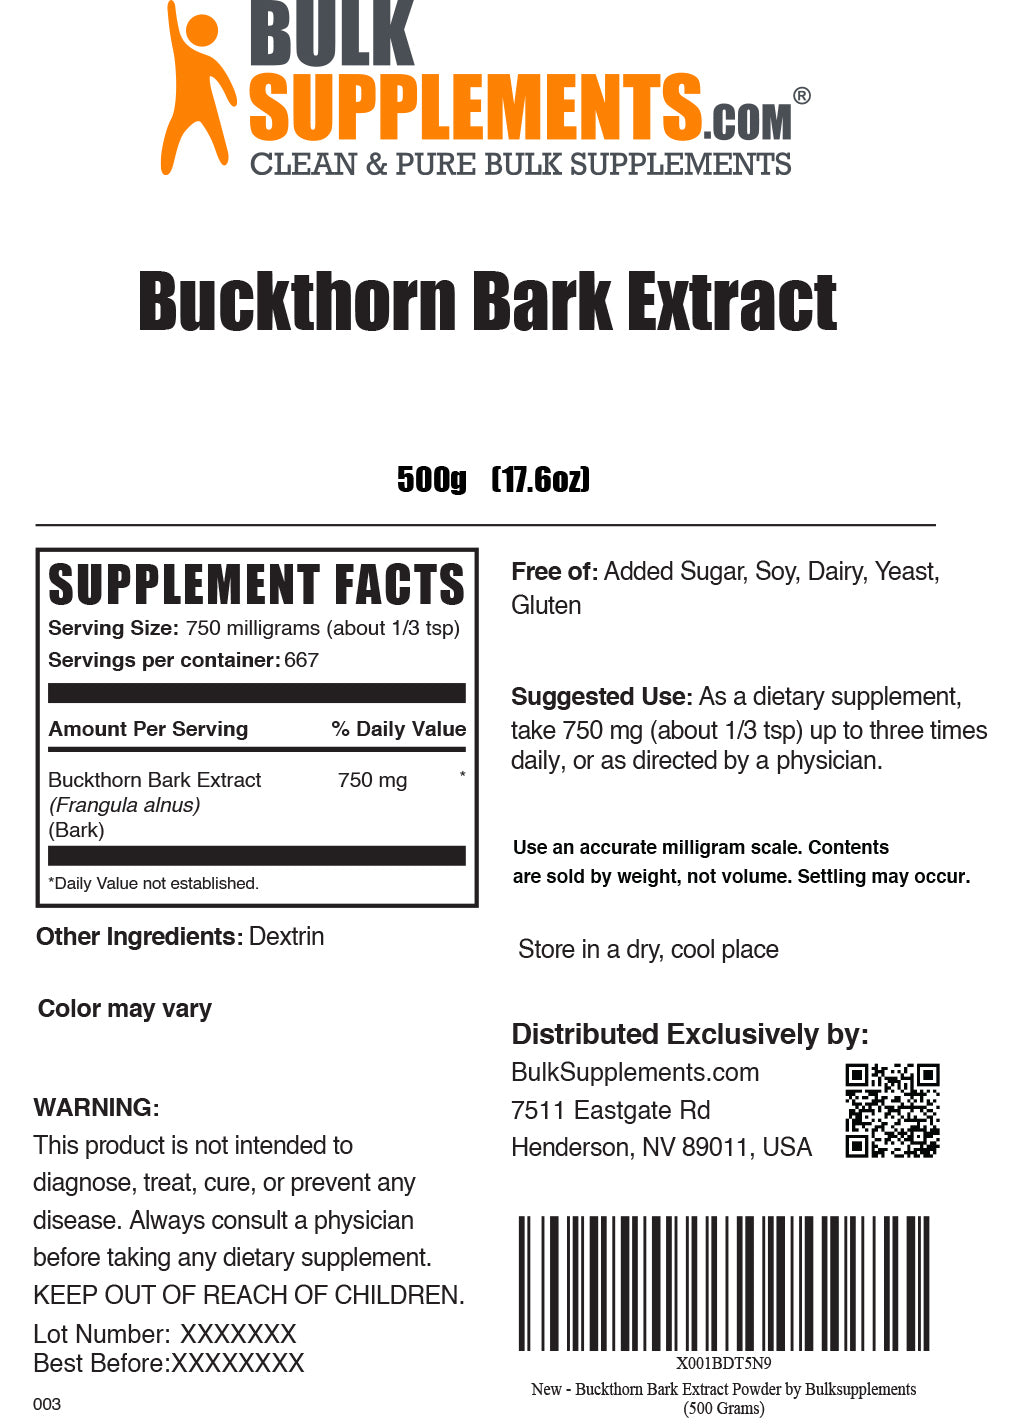 500g Buckthorn Bark Extract Supplement Facts